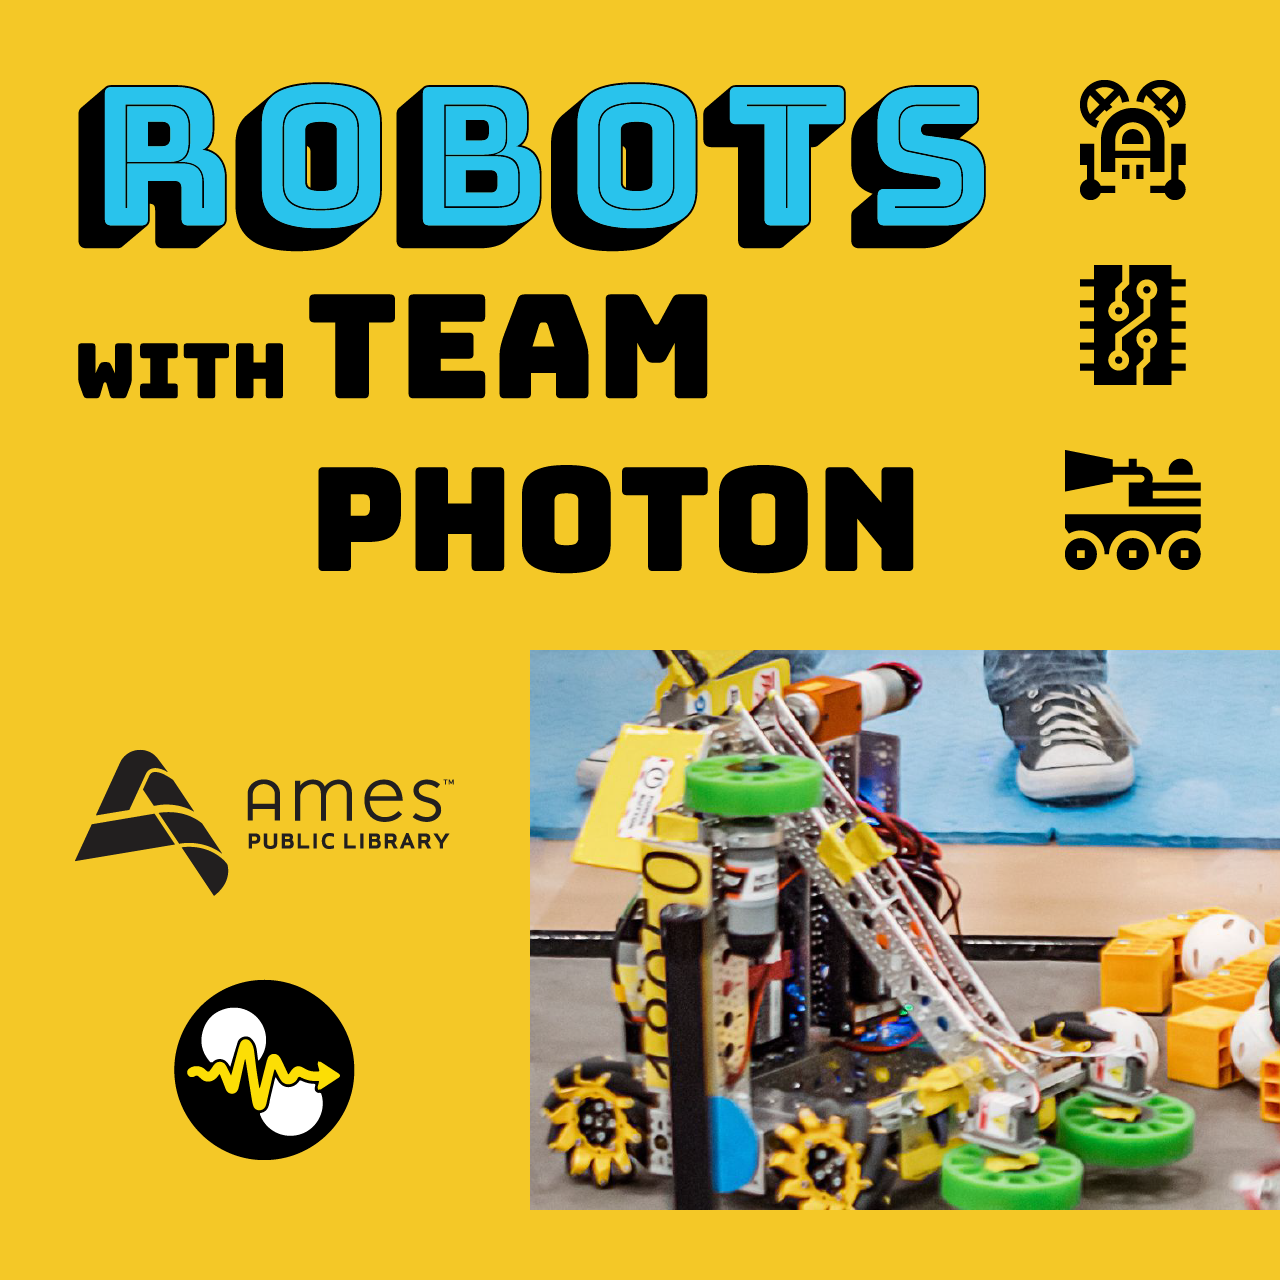 Robots with Team Photon